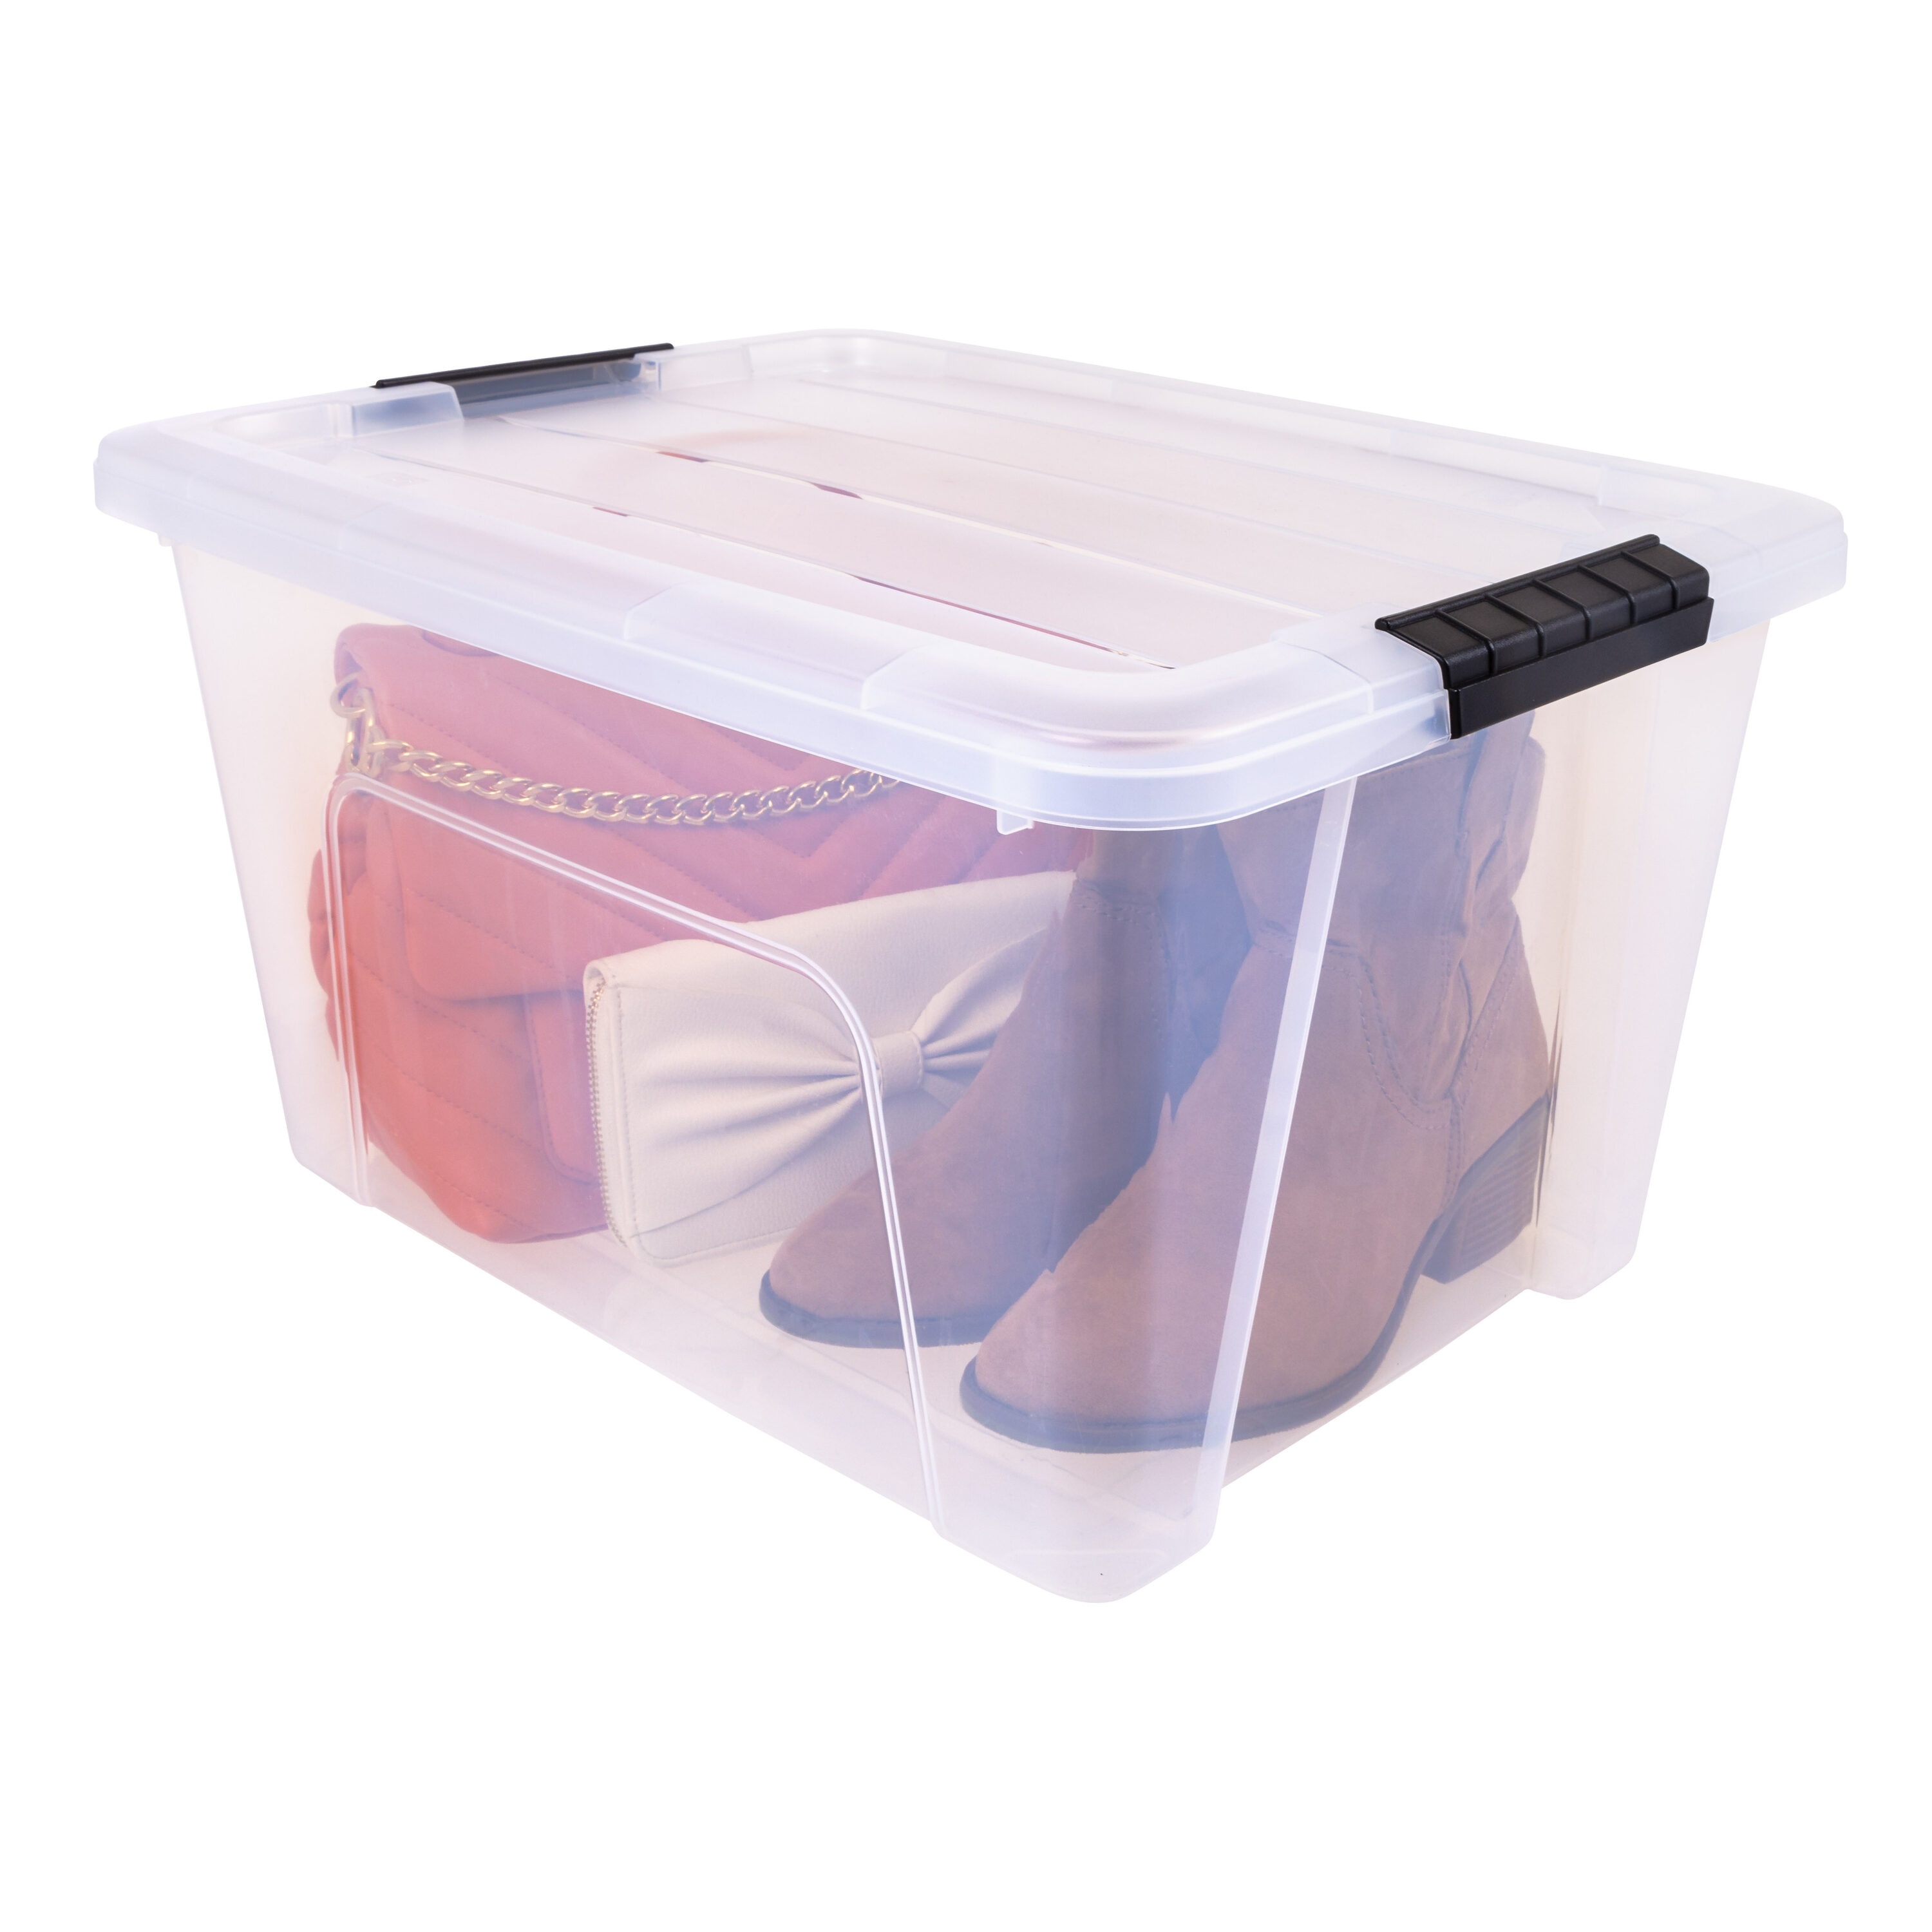 Storex 4 Gallon (15L) Classroom Storage Bin, Assorted Colors, 6-Pack